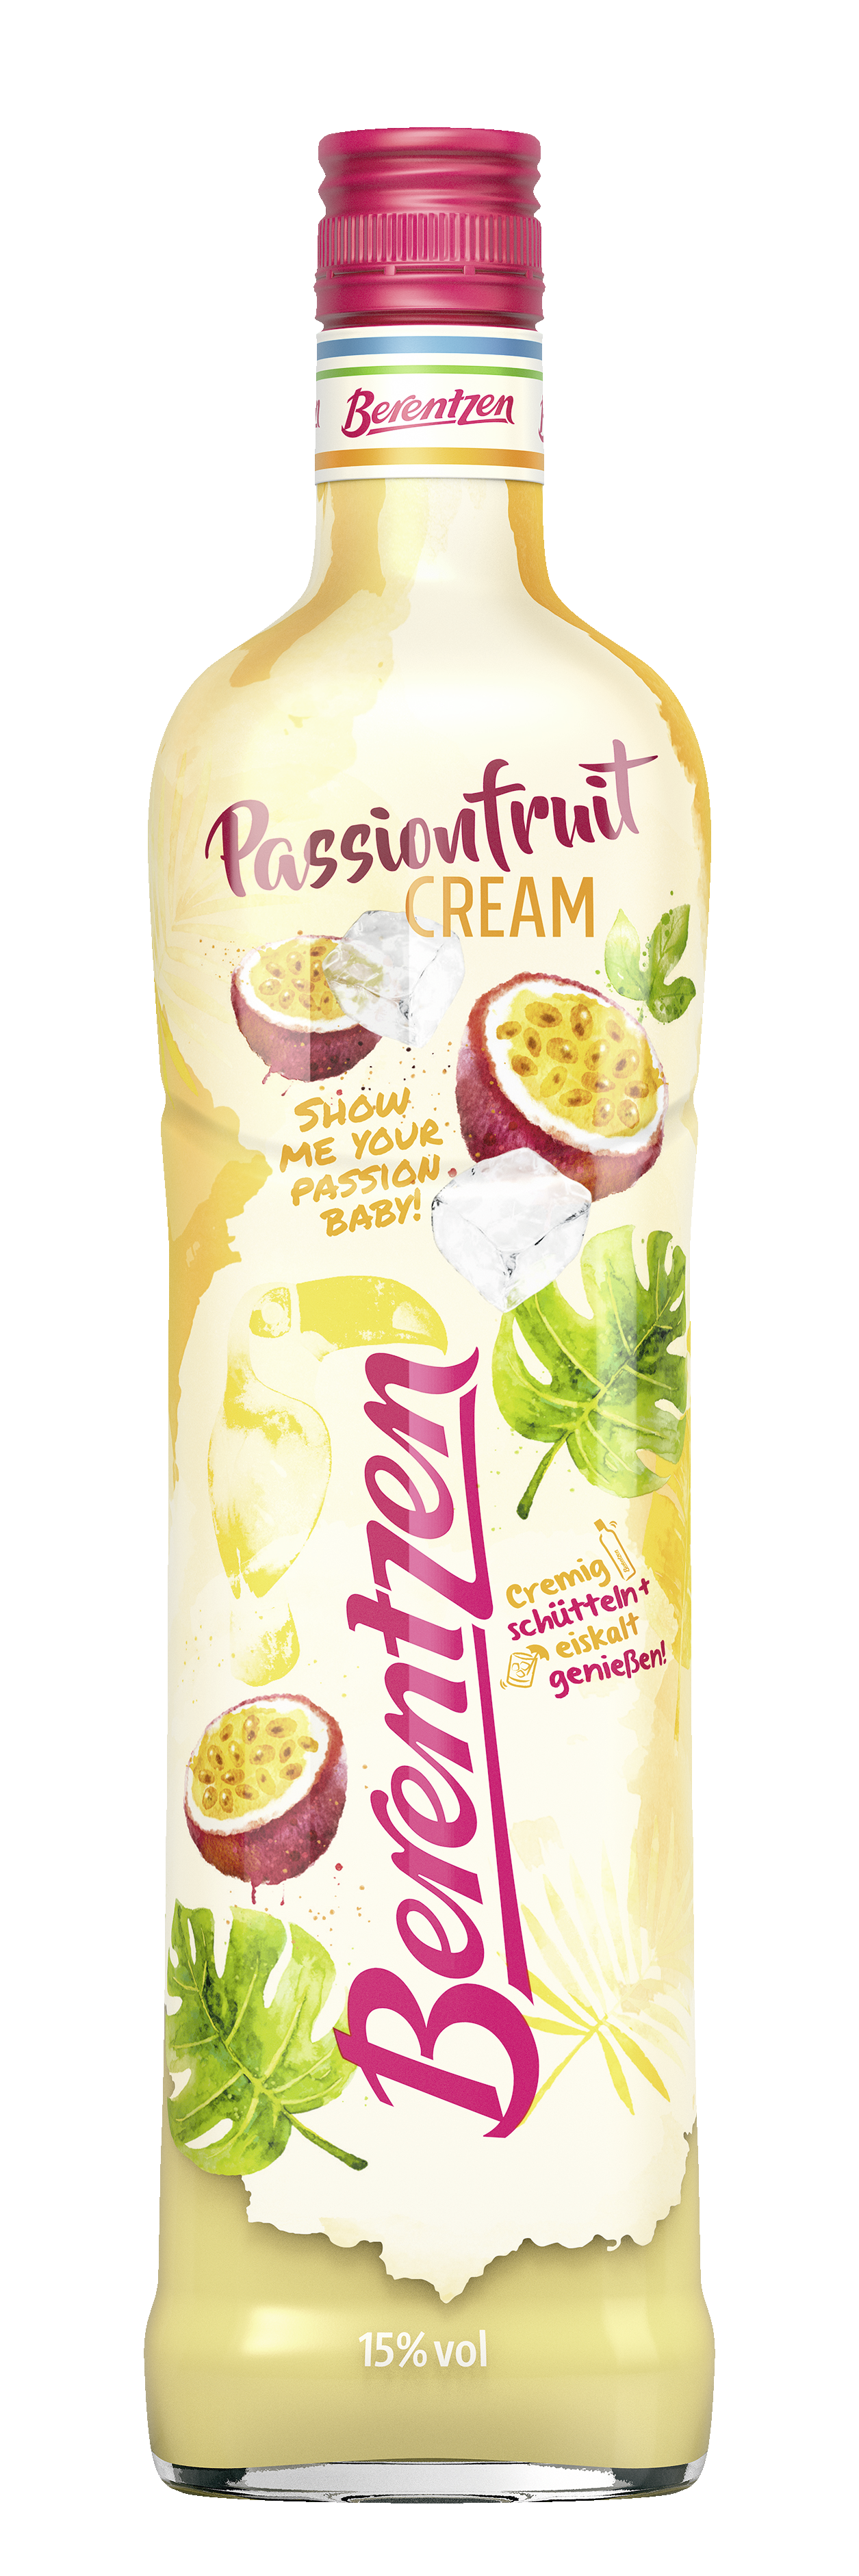 Berentzen - Passionfruit Cream - Likör 0,7l 15vol.